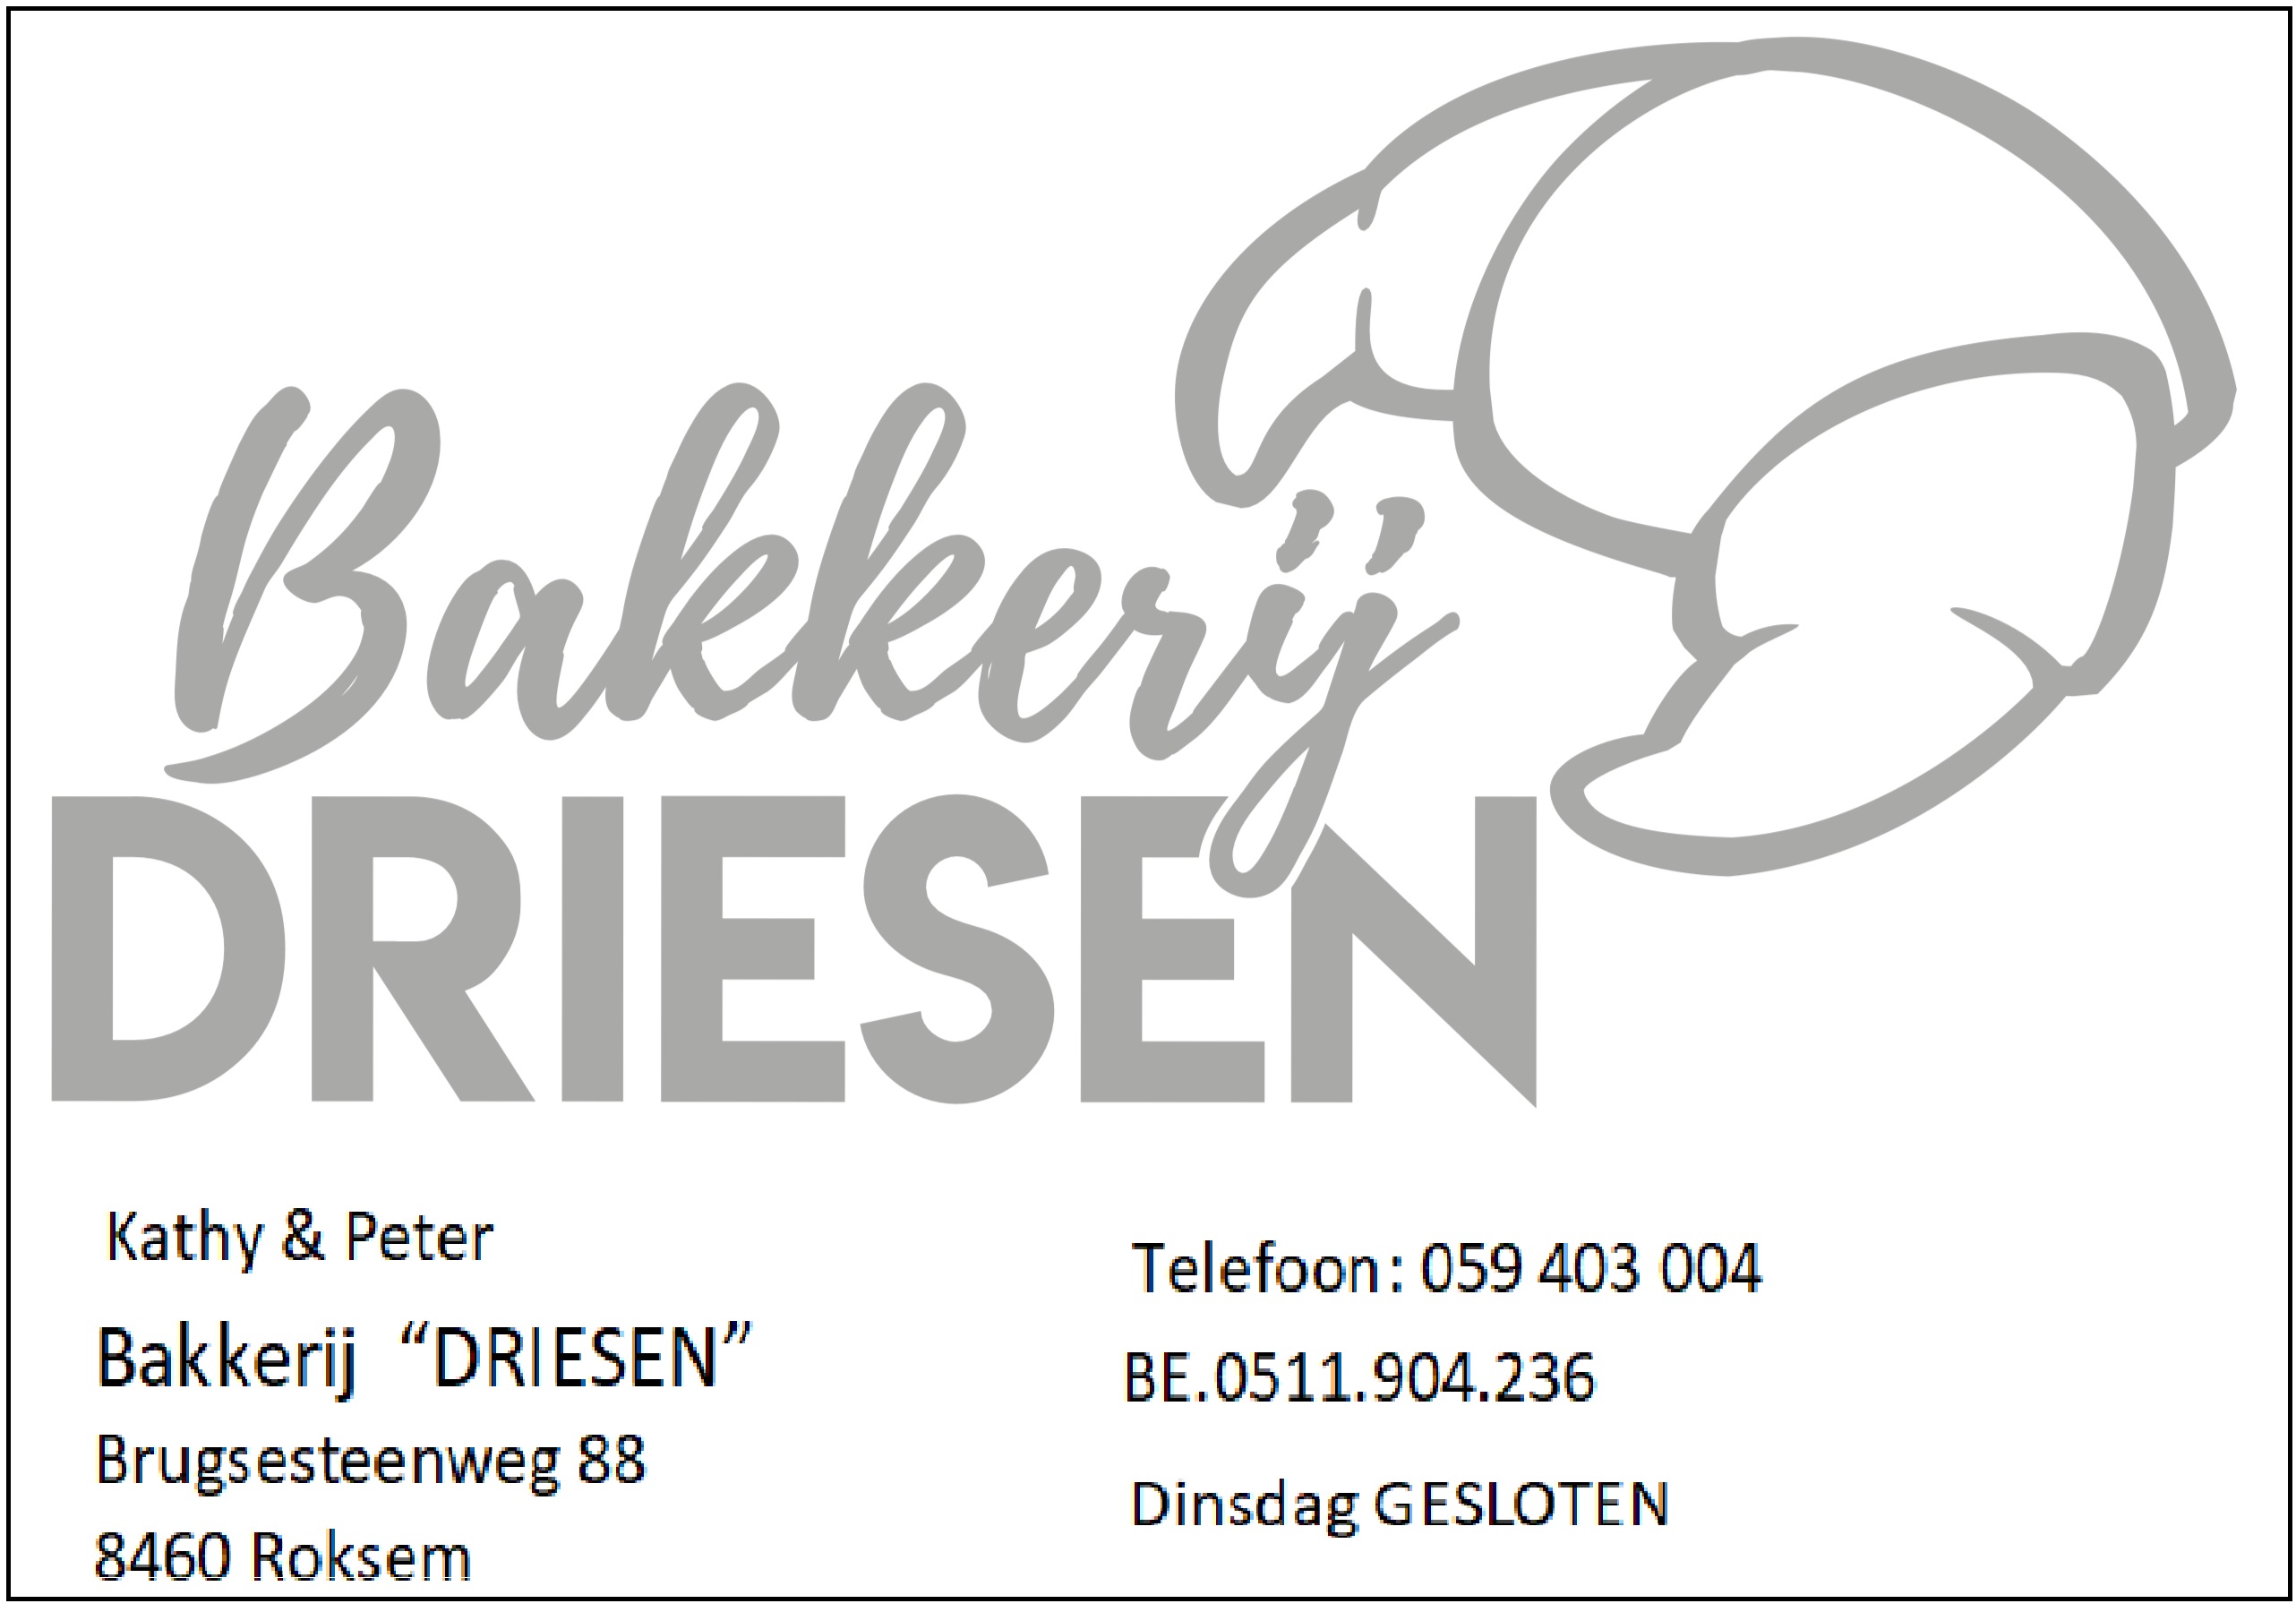 Bakkerij Driesen (378K)